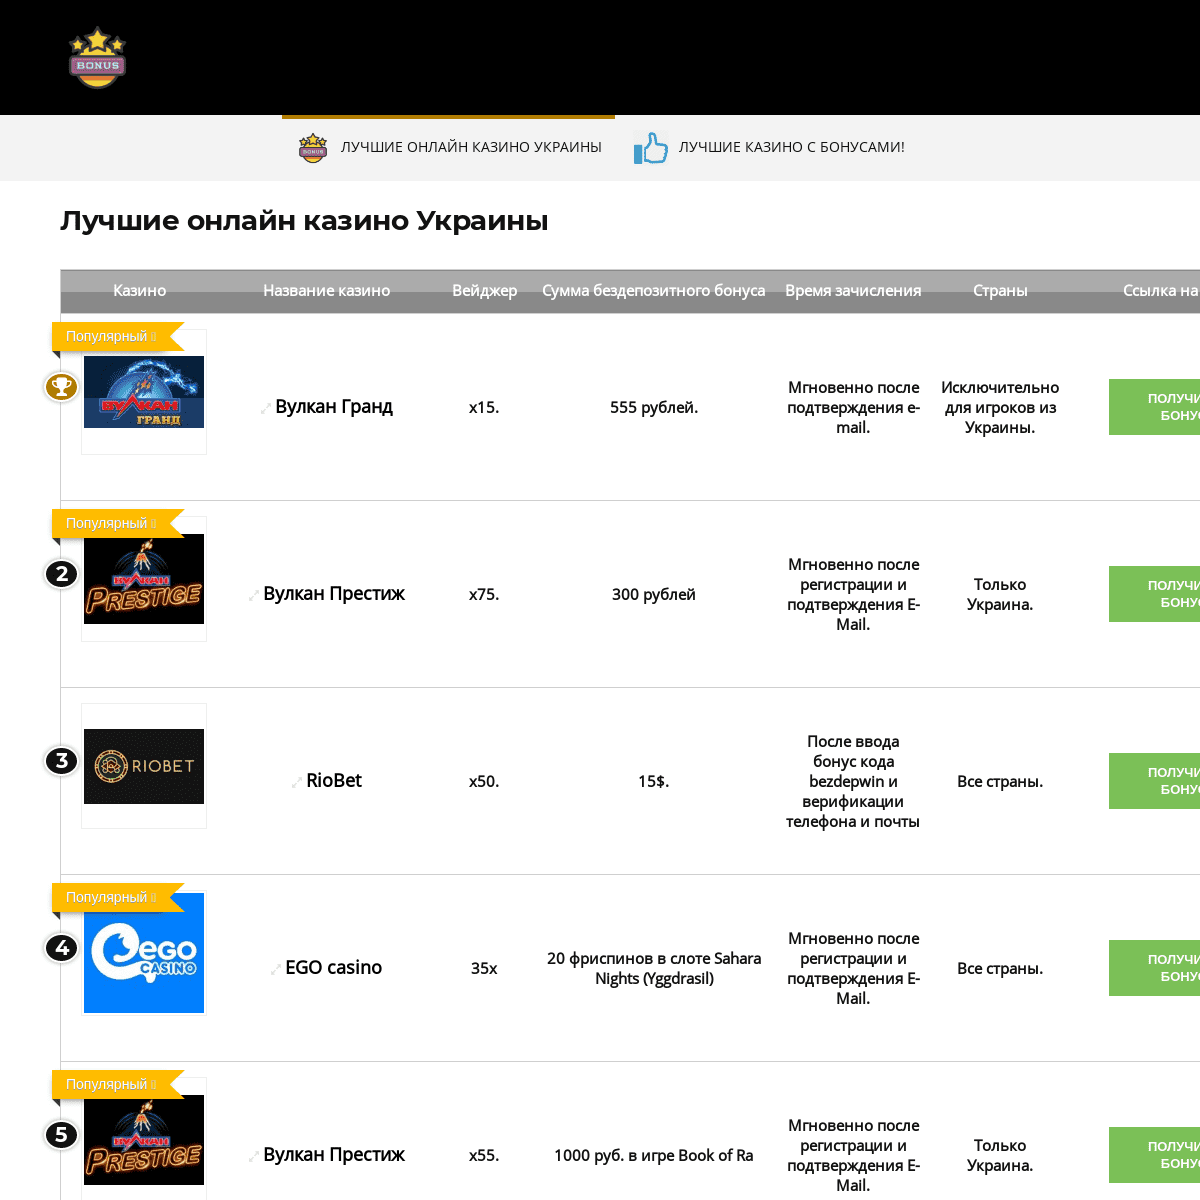 A complete backup of https://best-casinos-online.com.ua